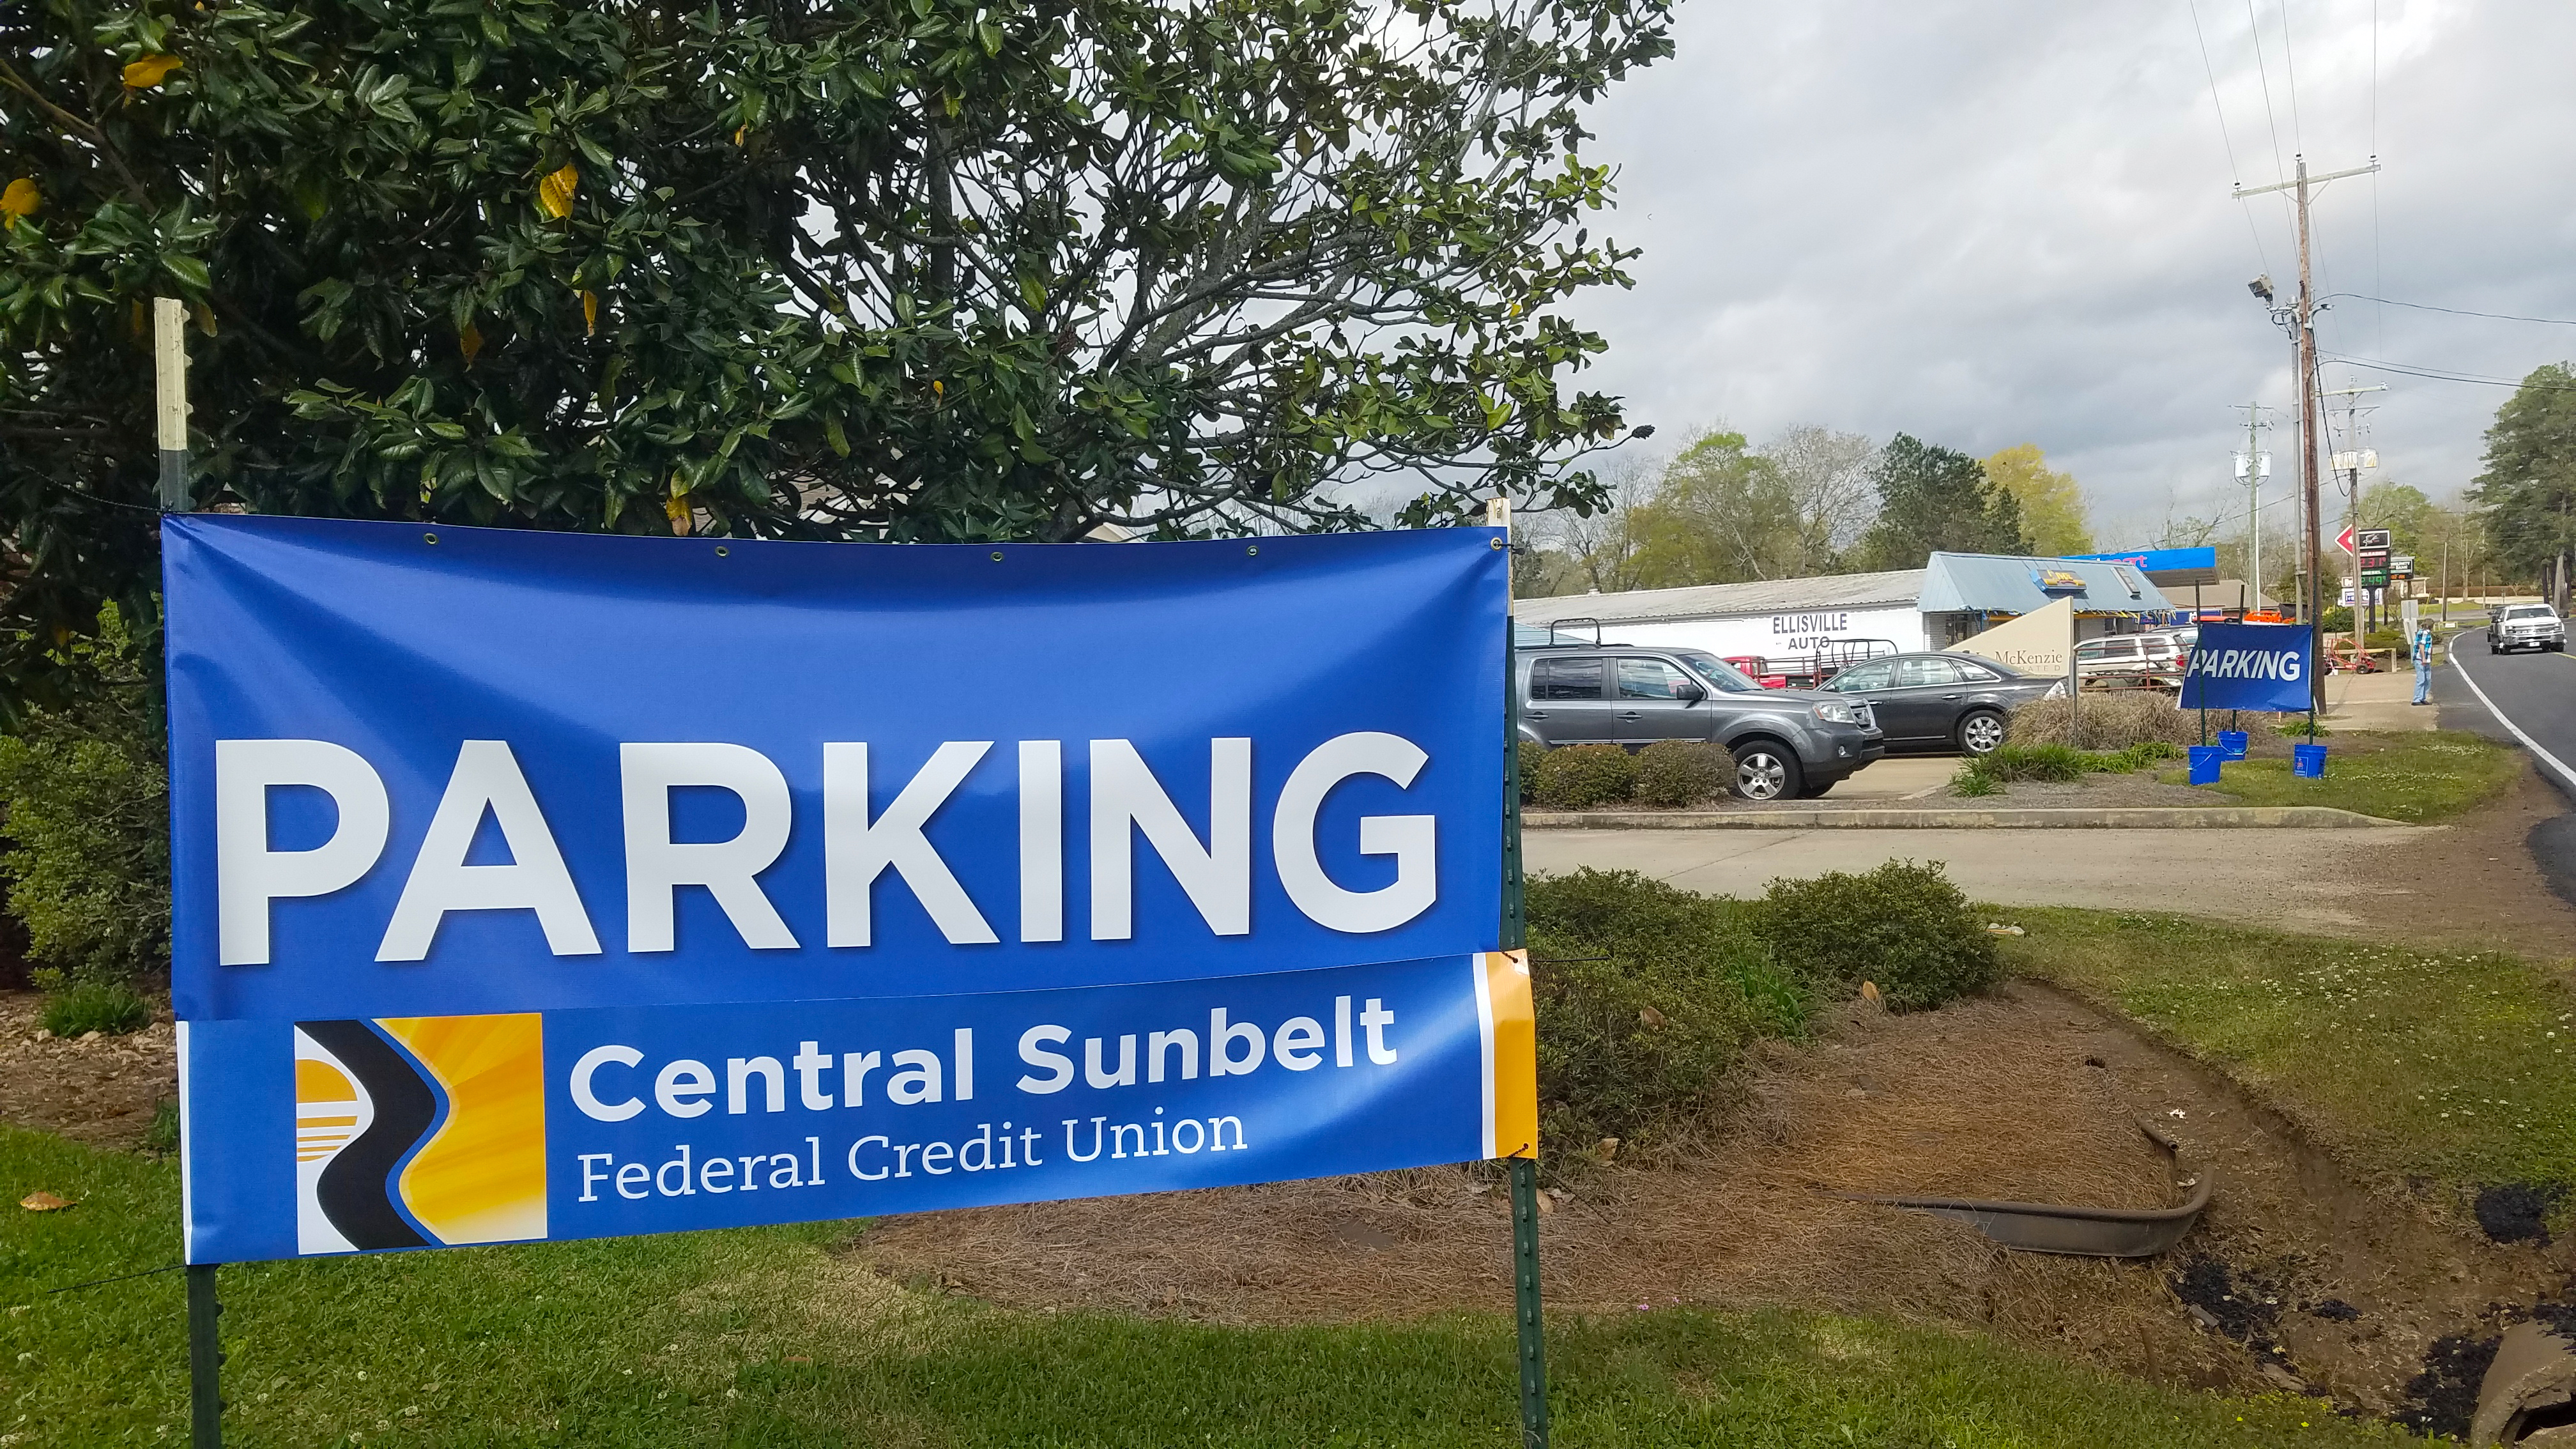 Central Sunbelt - Grand opening event in Ellisville